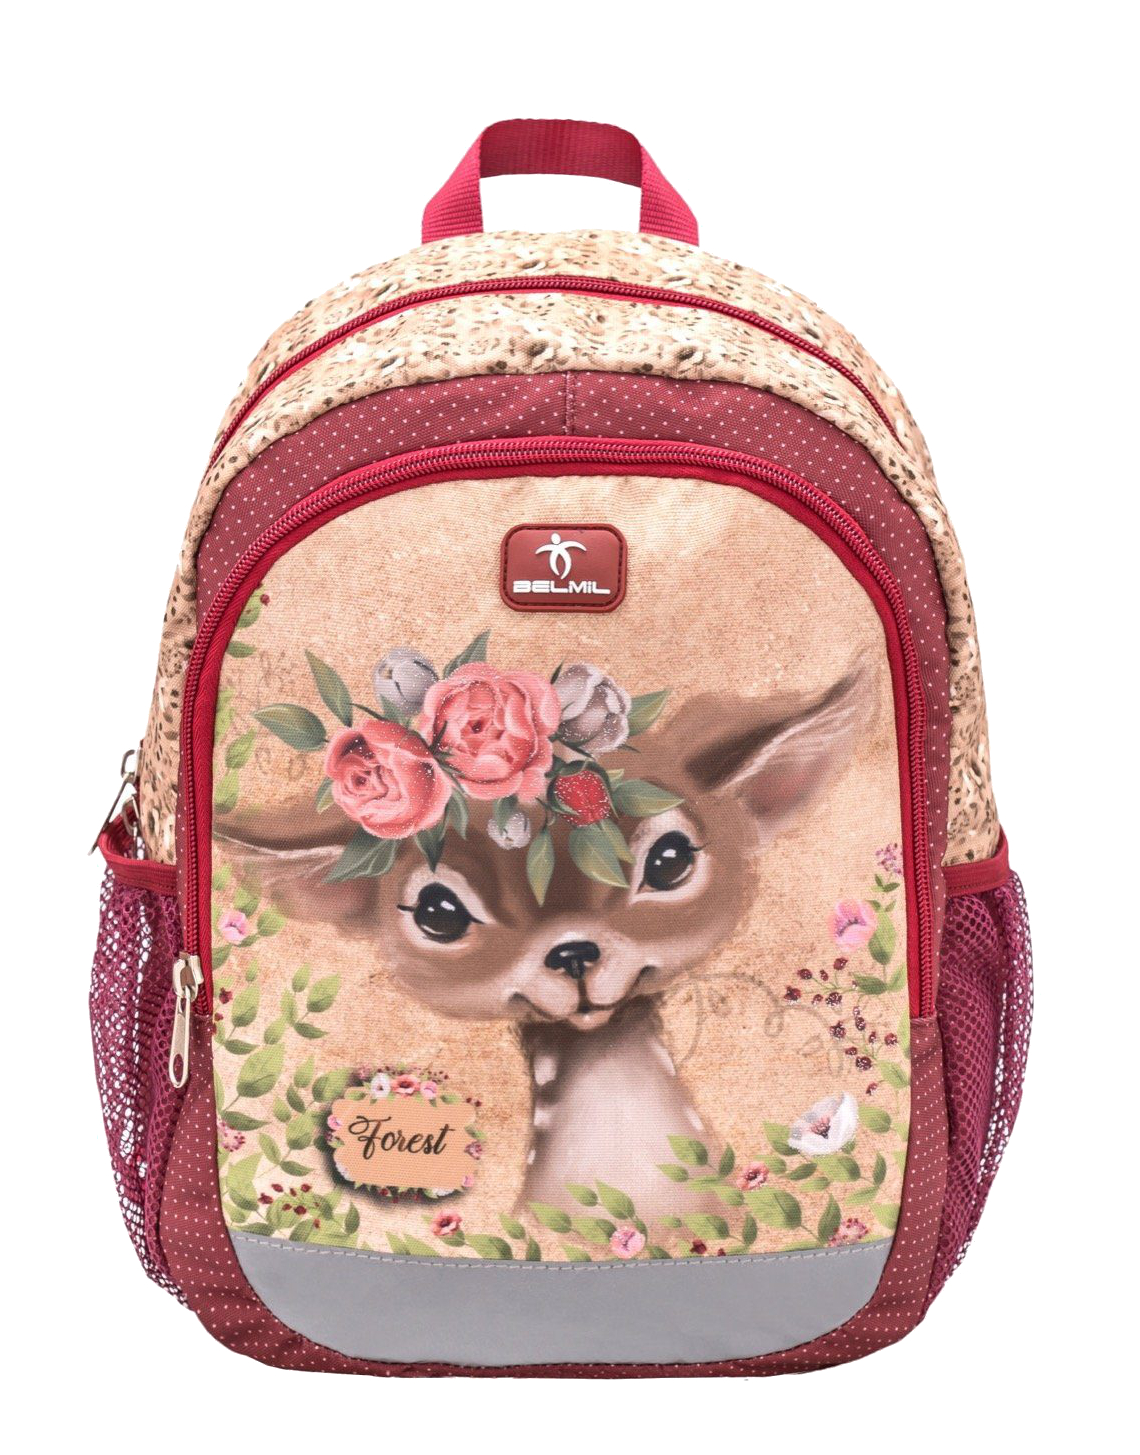 Belmil 'Kiddy Plus' Kinderrucksack 12l ca. 300g animal forest bambi 